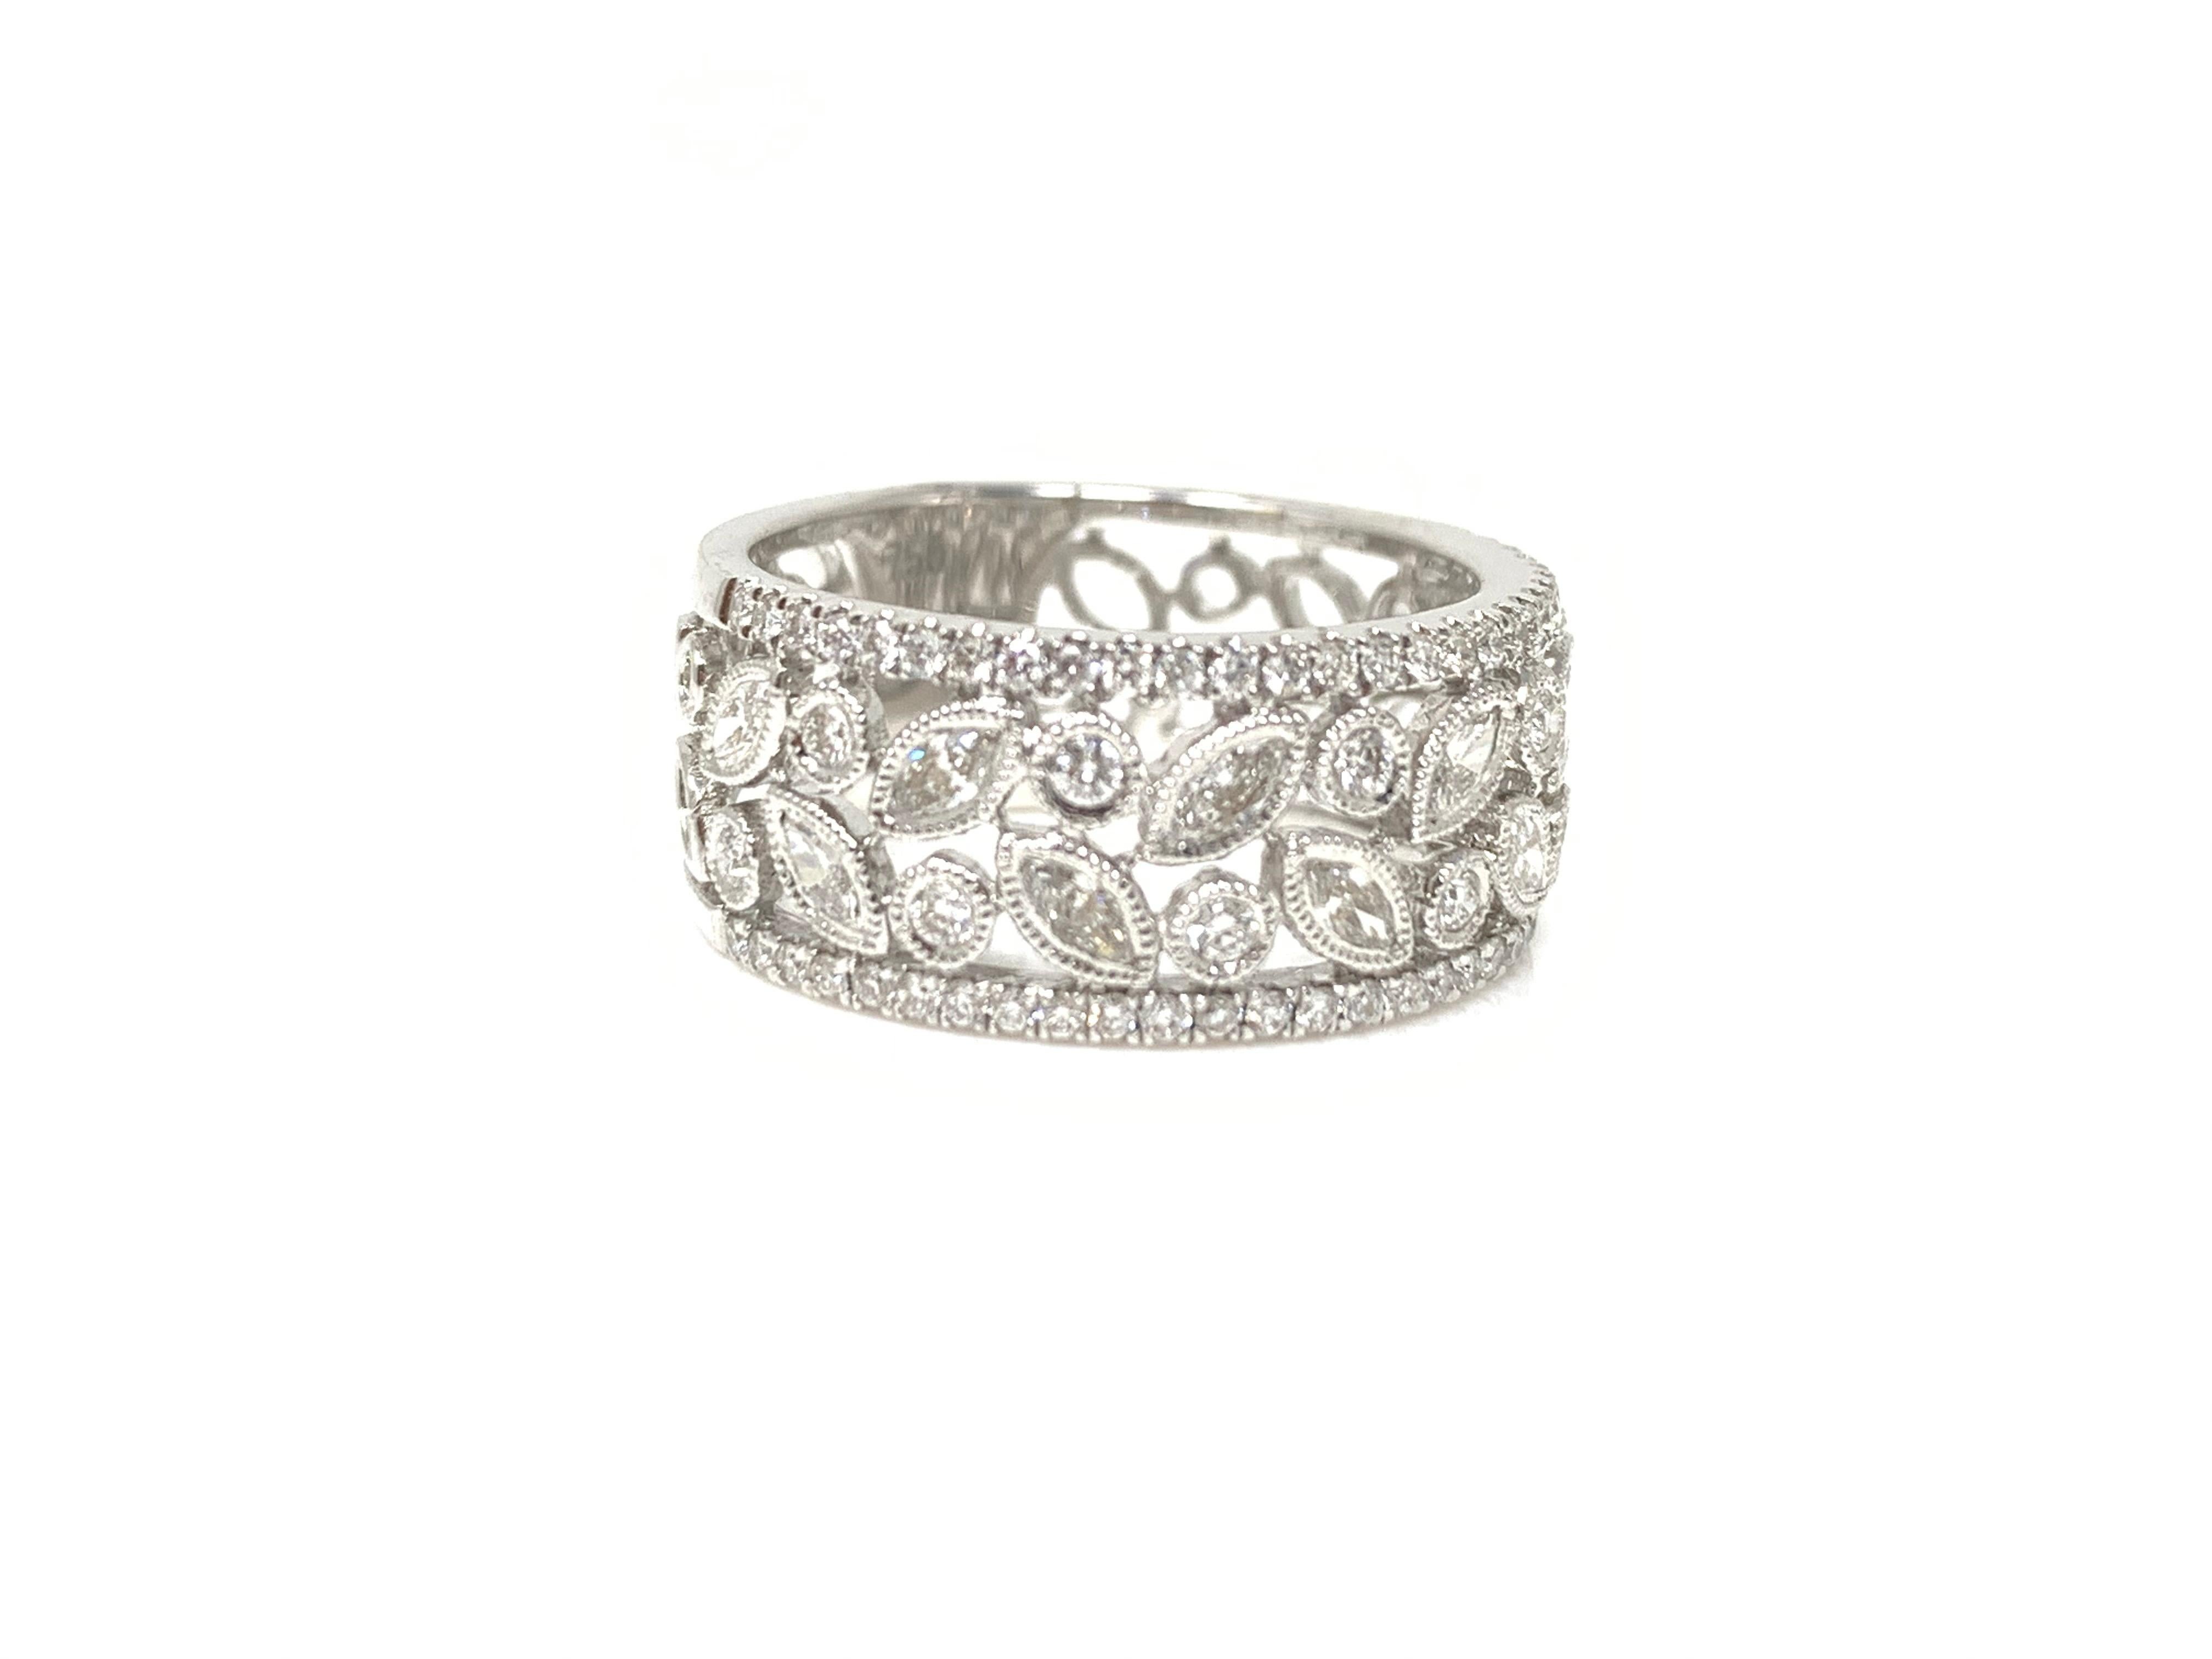 Moguldiam Inc diamond wedding band set in 18k white gold. 
The details are as follows: 
Diamond weight: 0.93
metal : 18k white gold 
Ring size : 6 1/2 